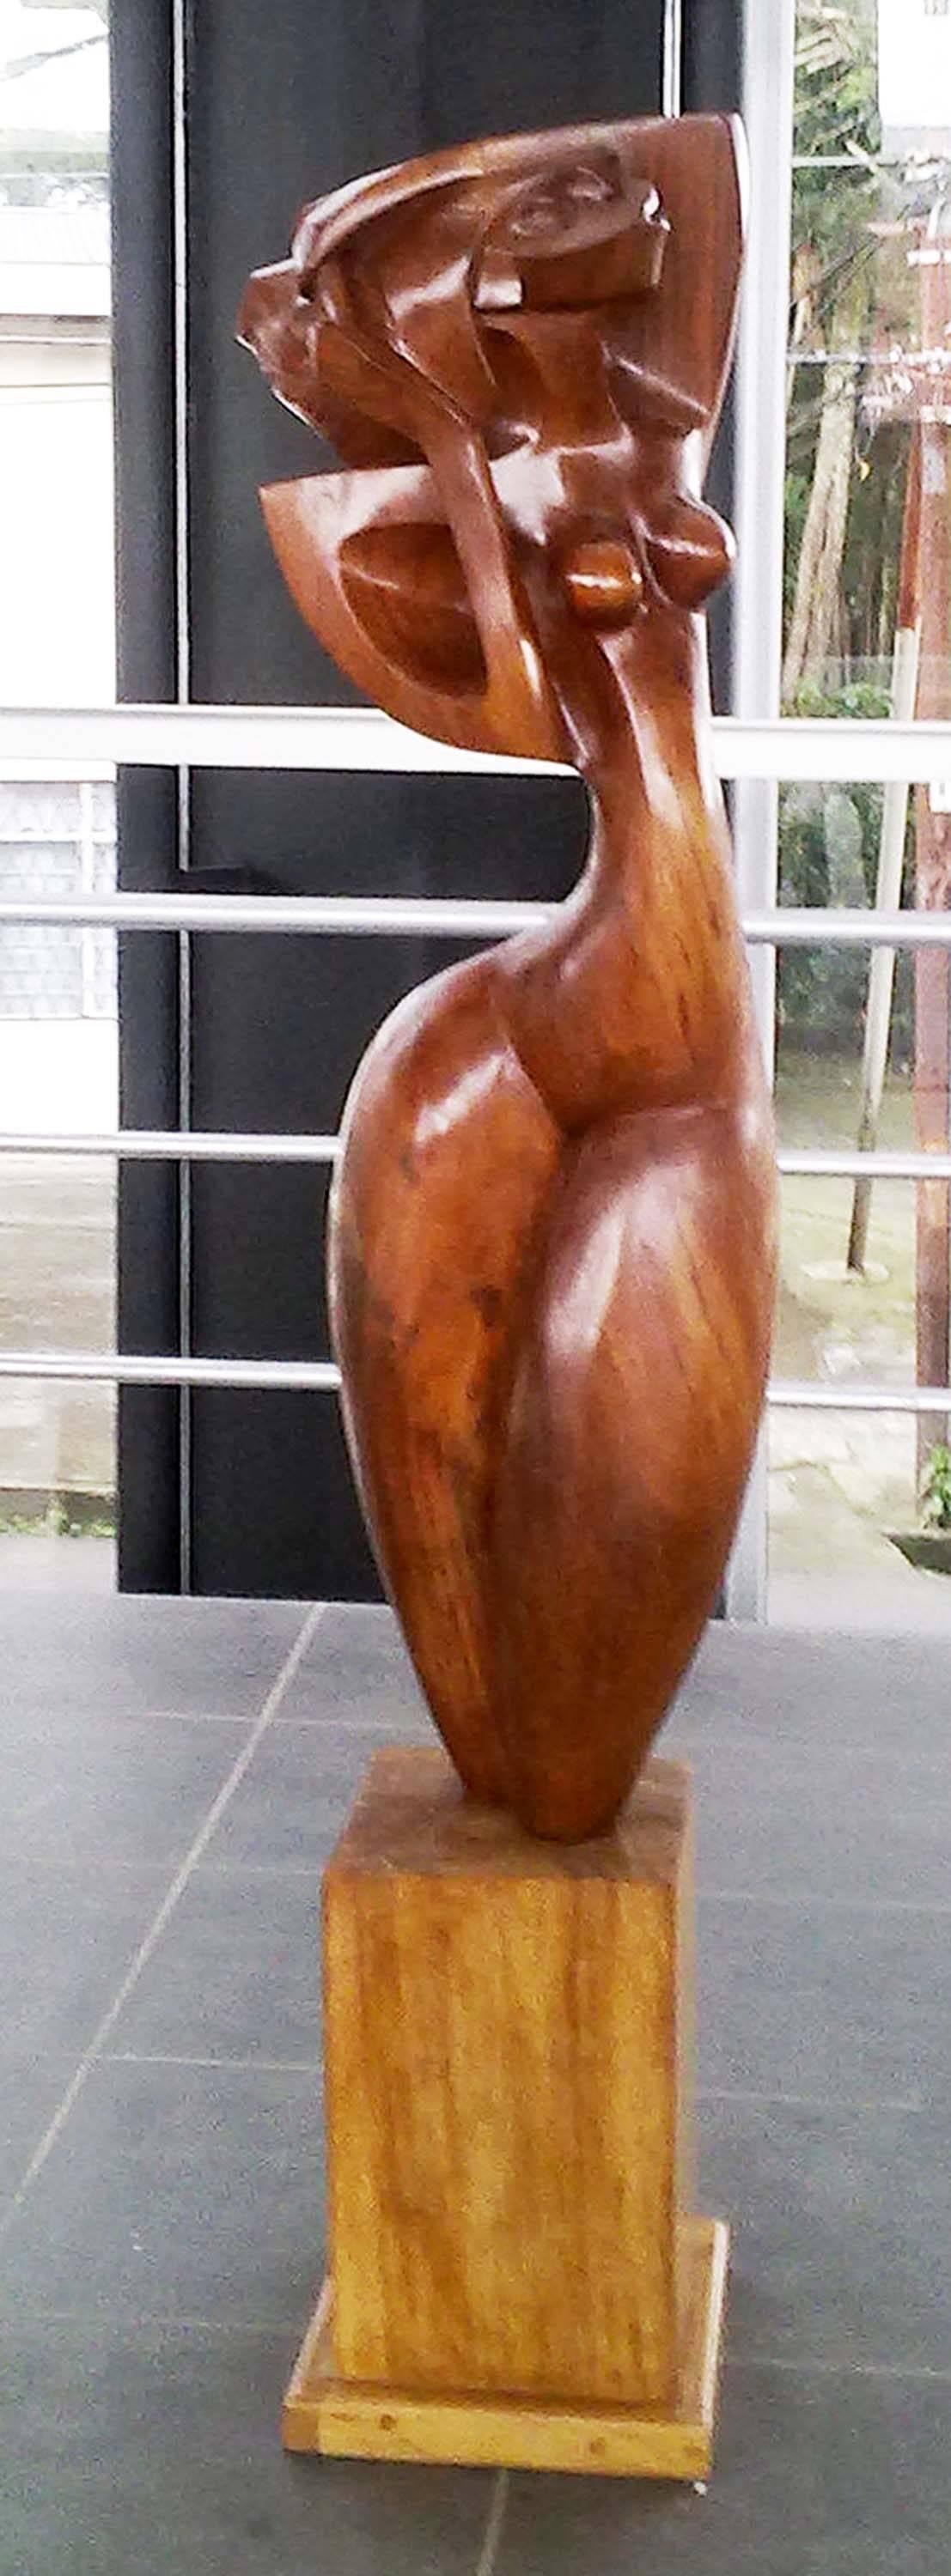 Ulises Jimenez Obregon Nude Sculpture - Rebecca